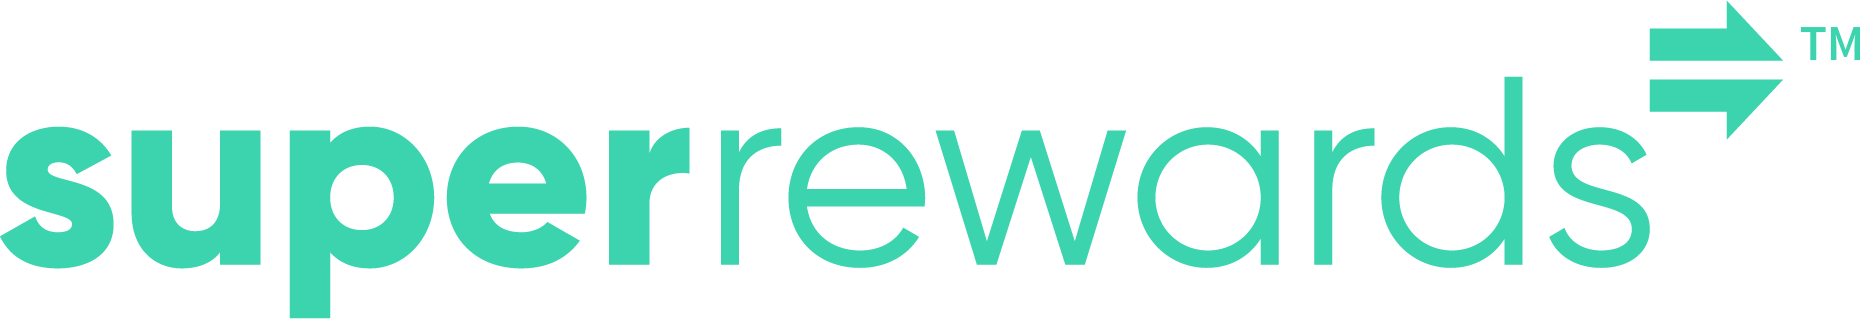 Superrewards logo